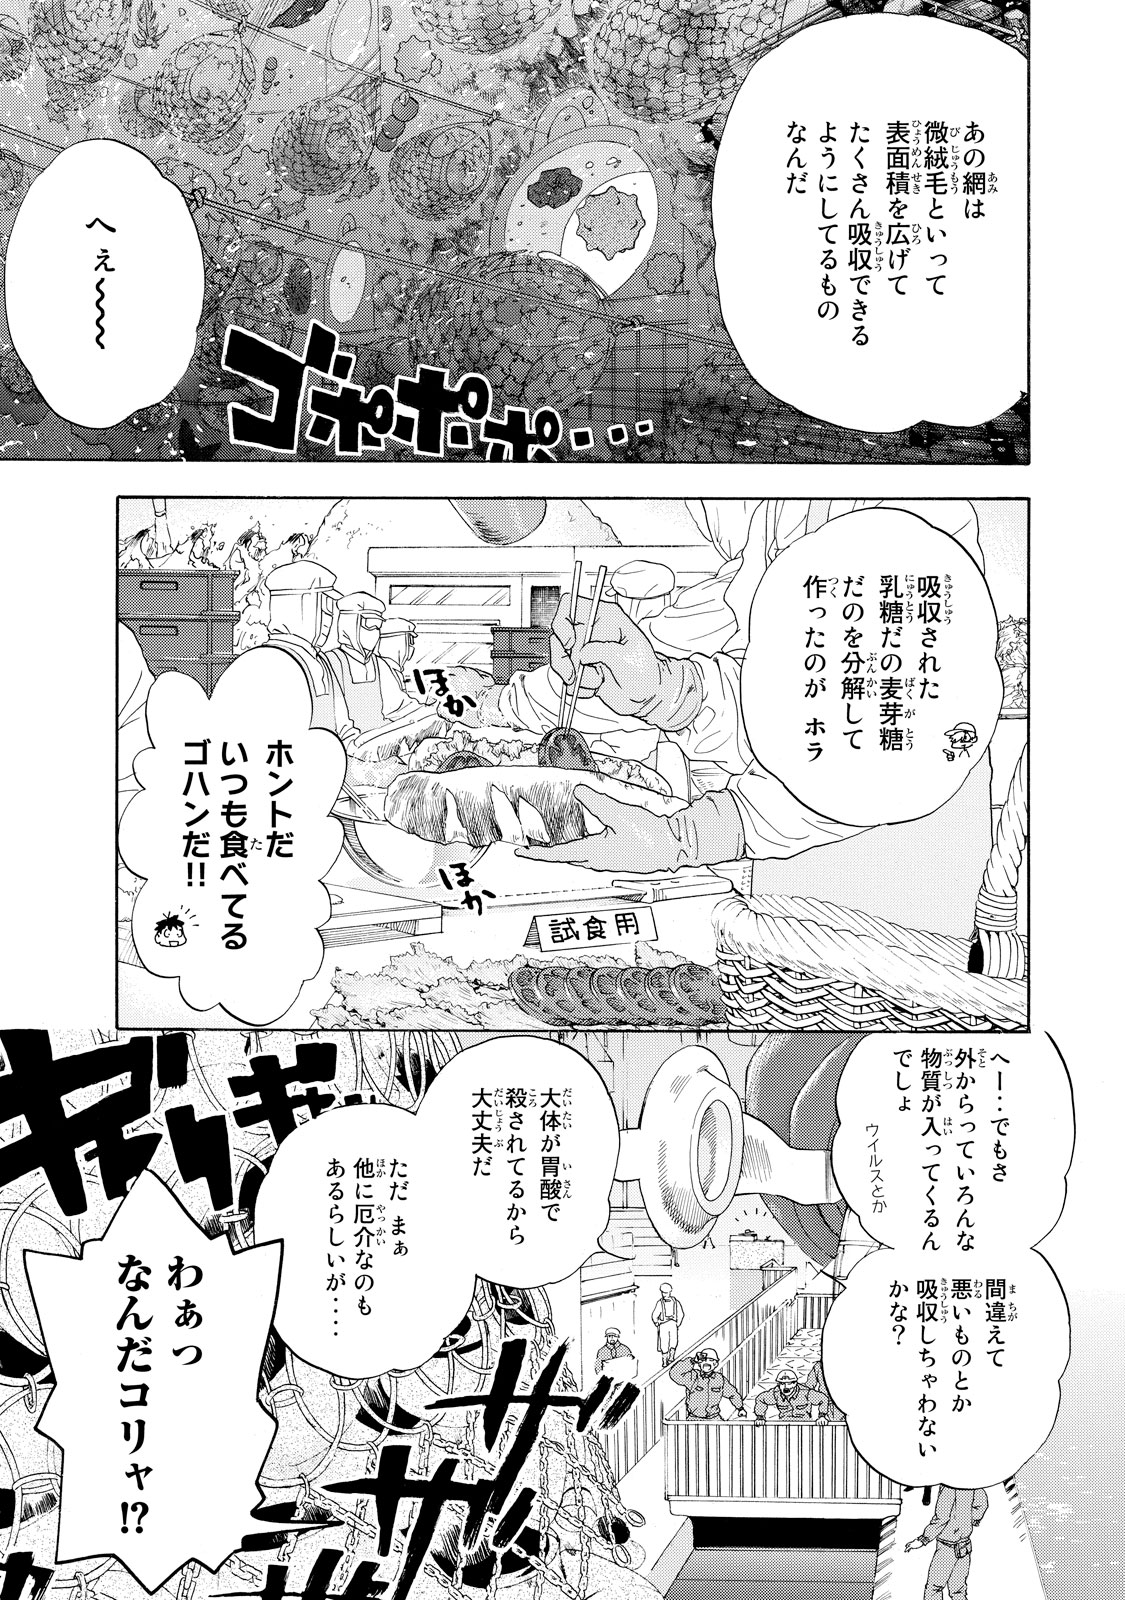 Hataraku Saibou - Chapter 21 - Page 3